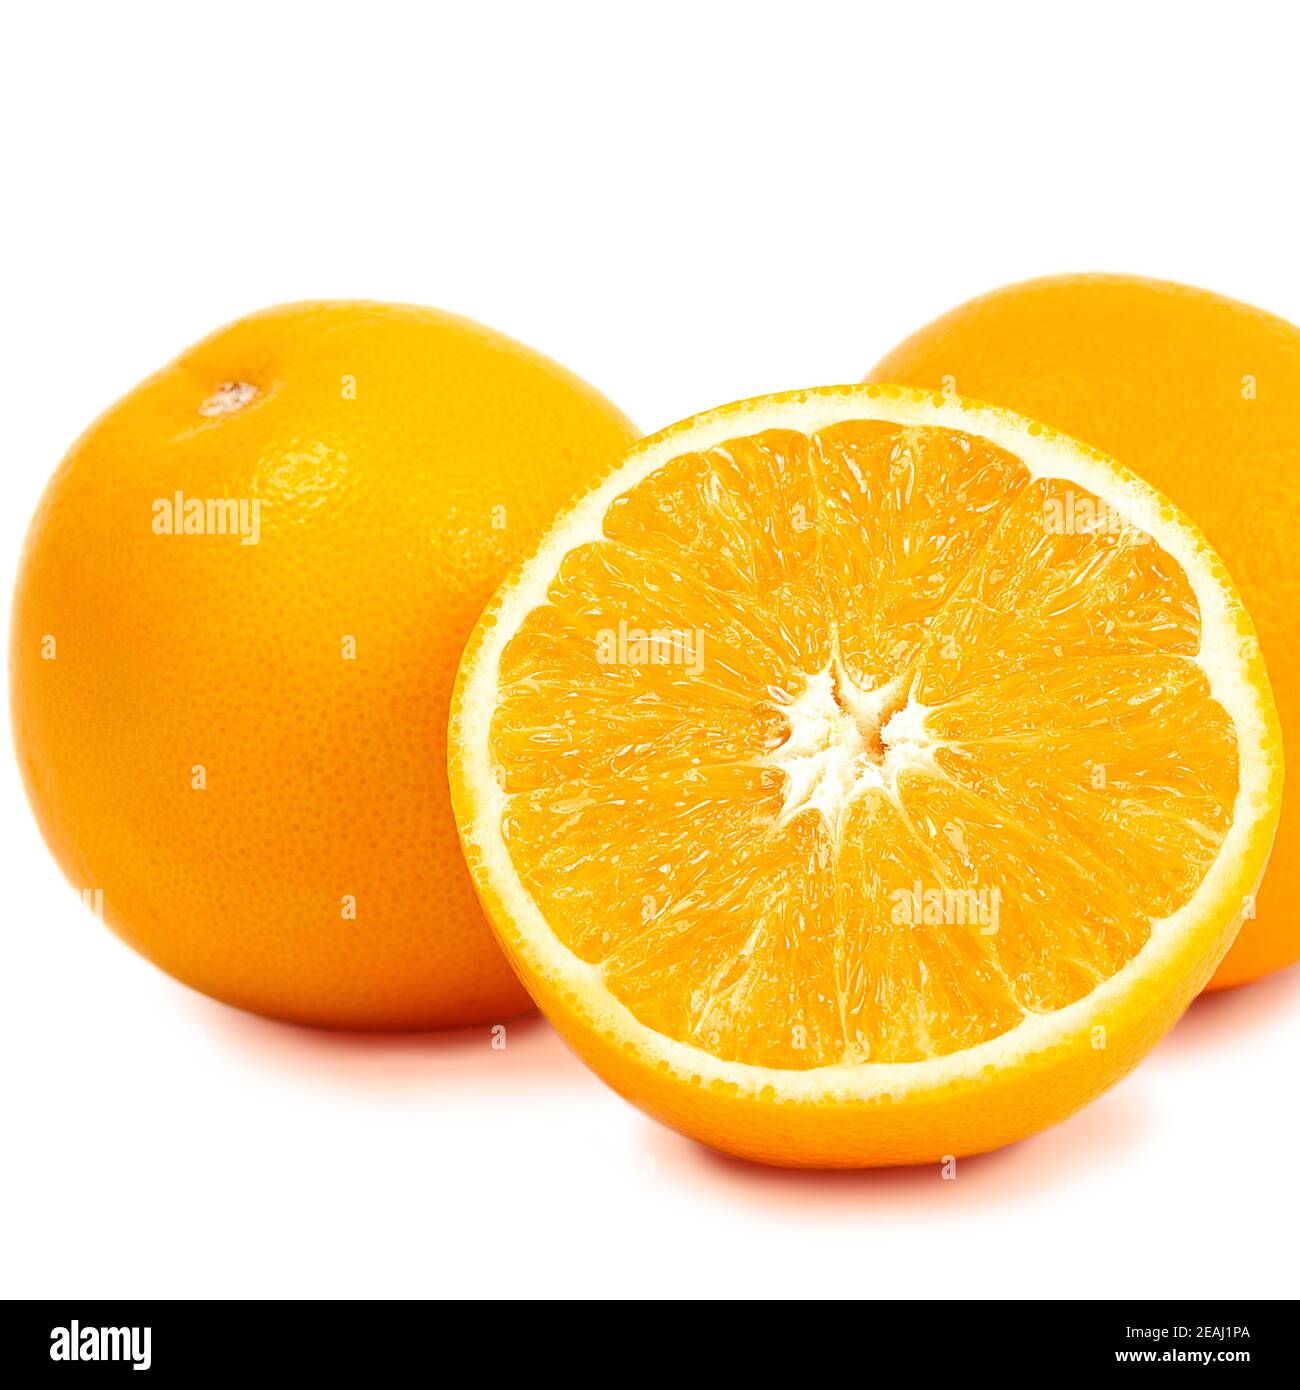 Medias naranjas y naranjas enteras - vozed